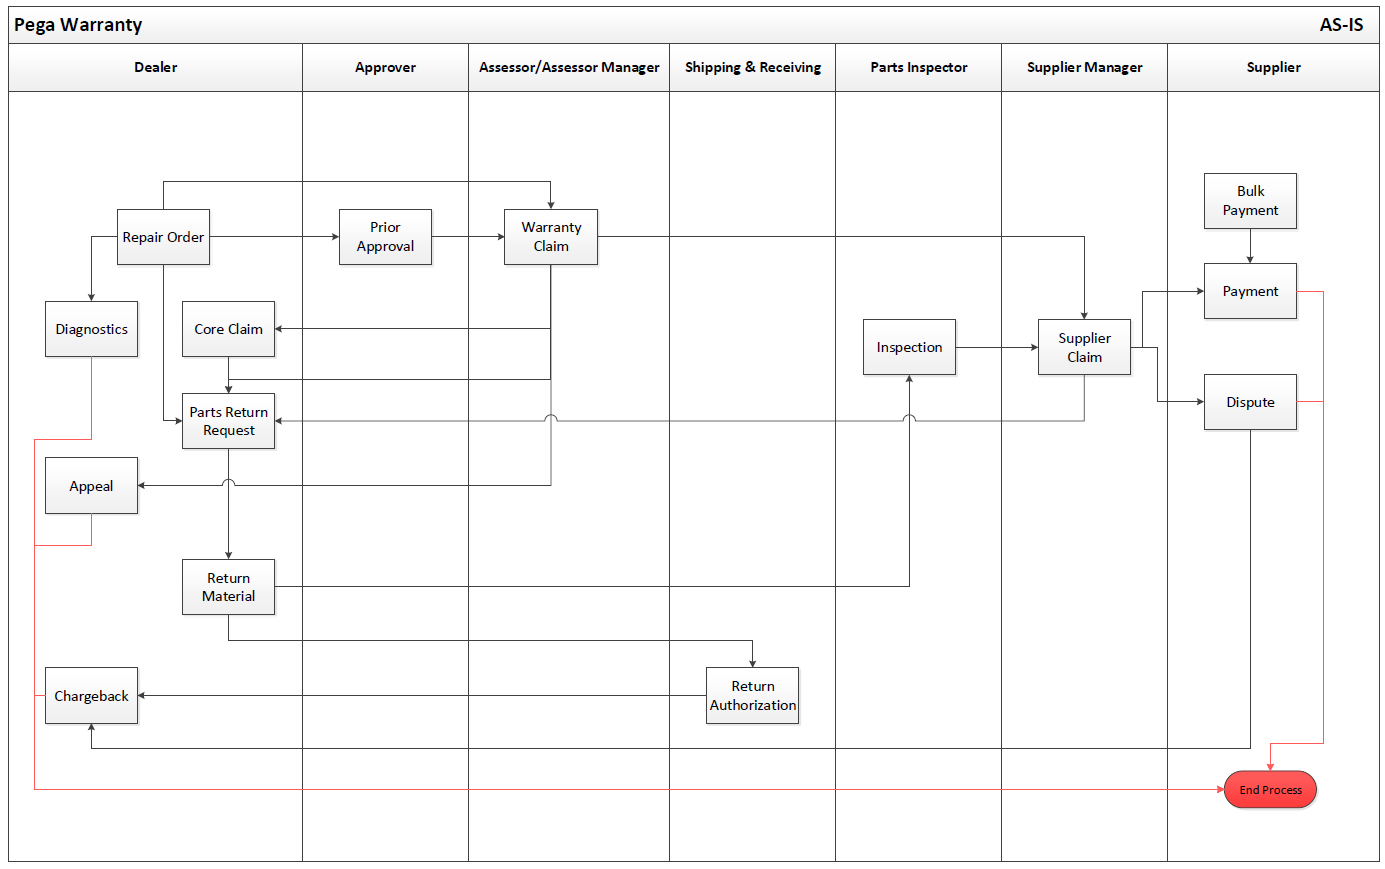 A diagram of the Pega Warranty application process flow